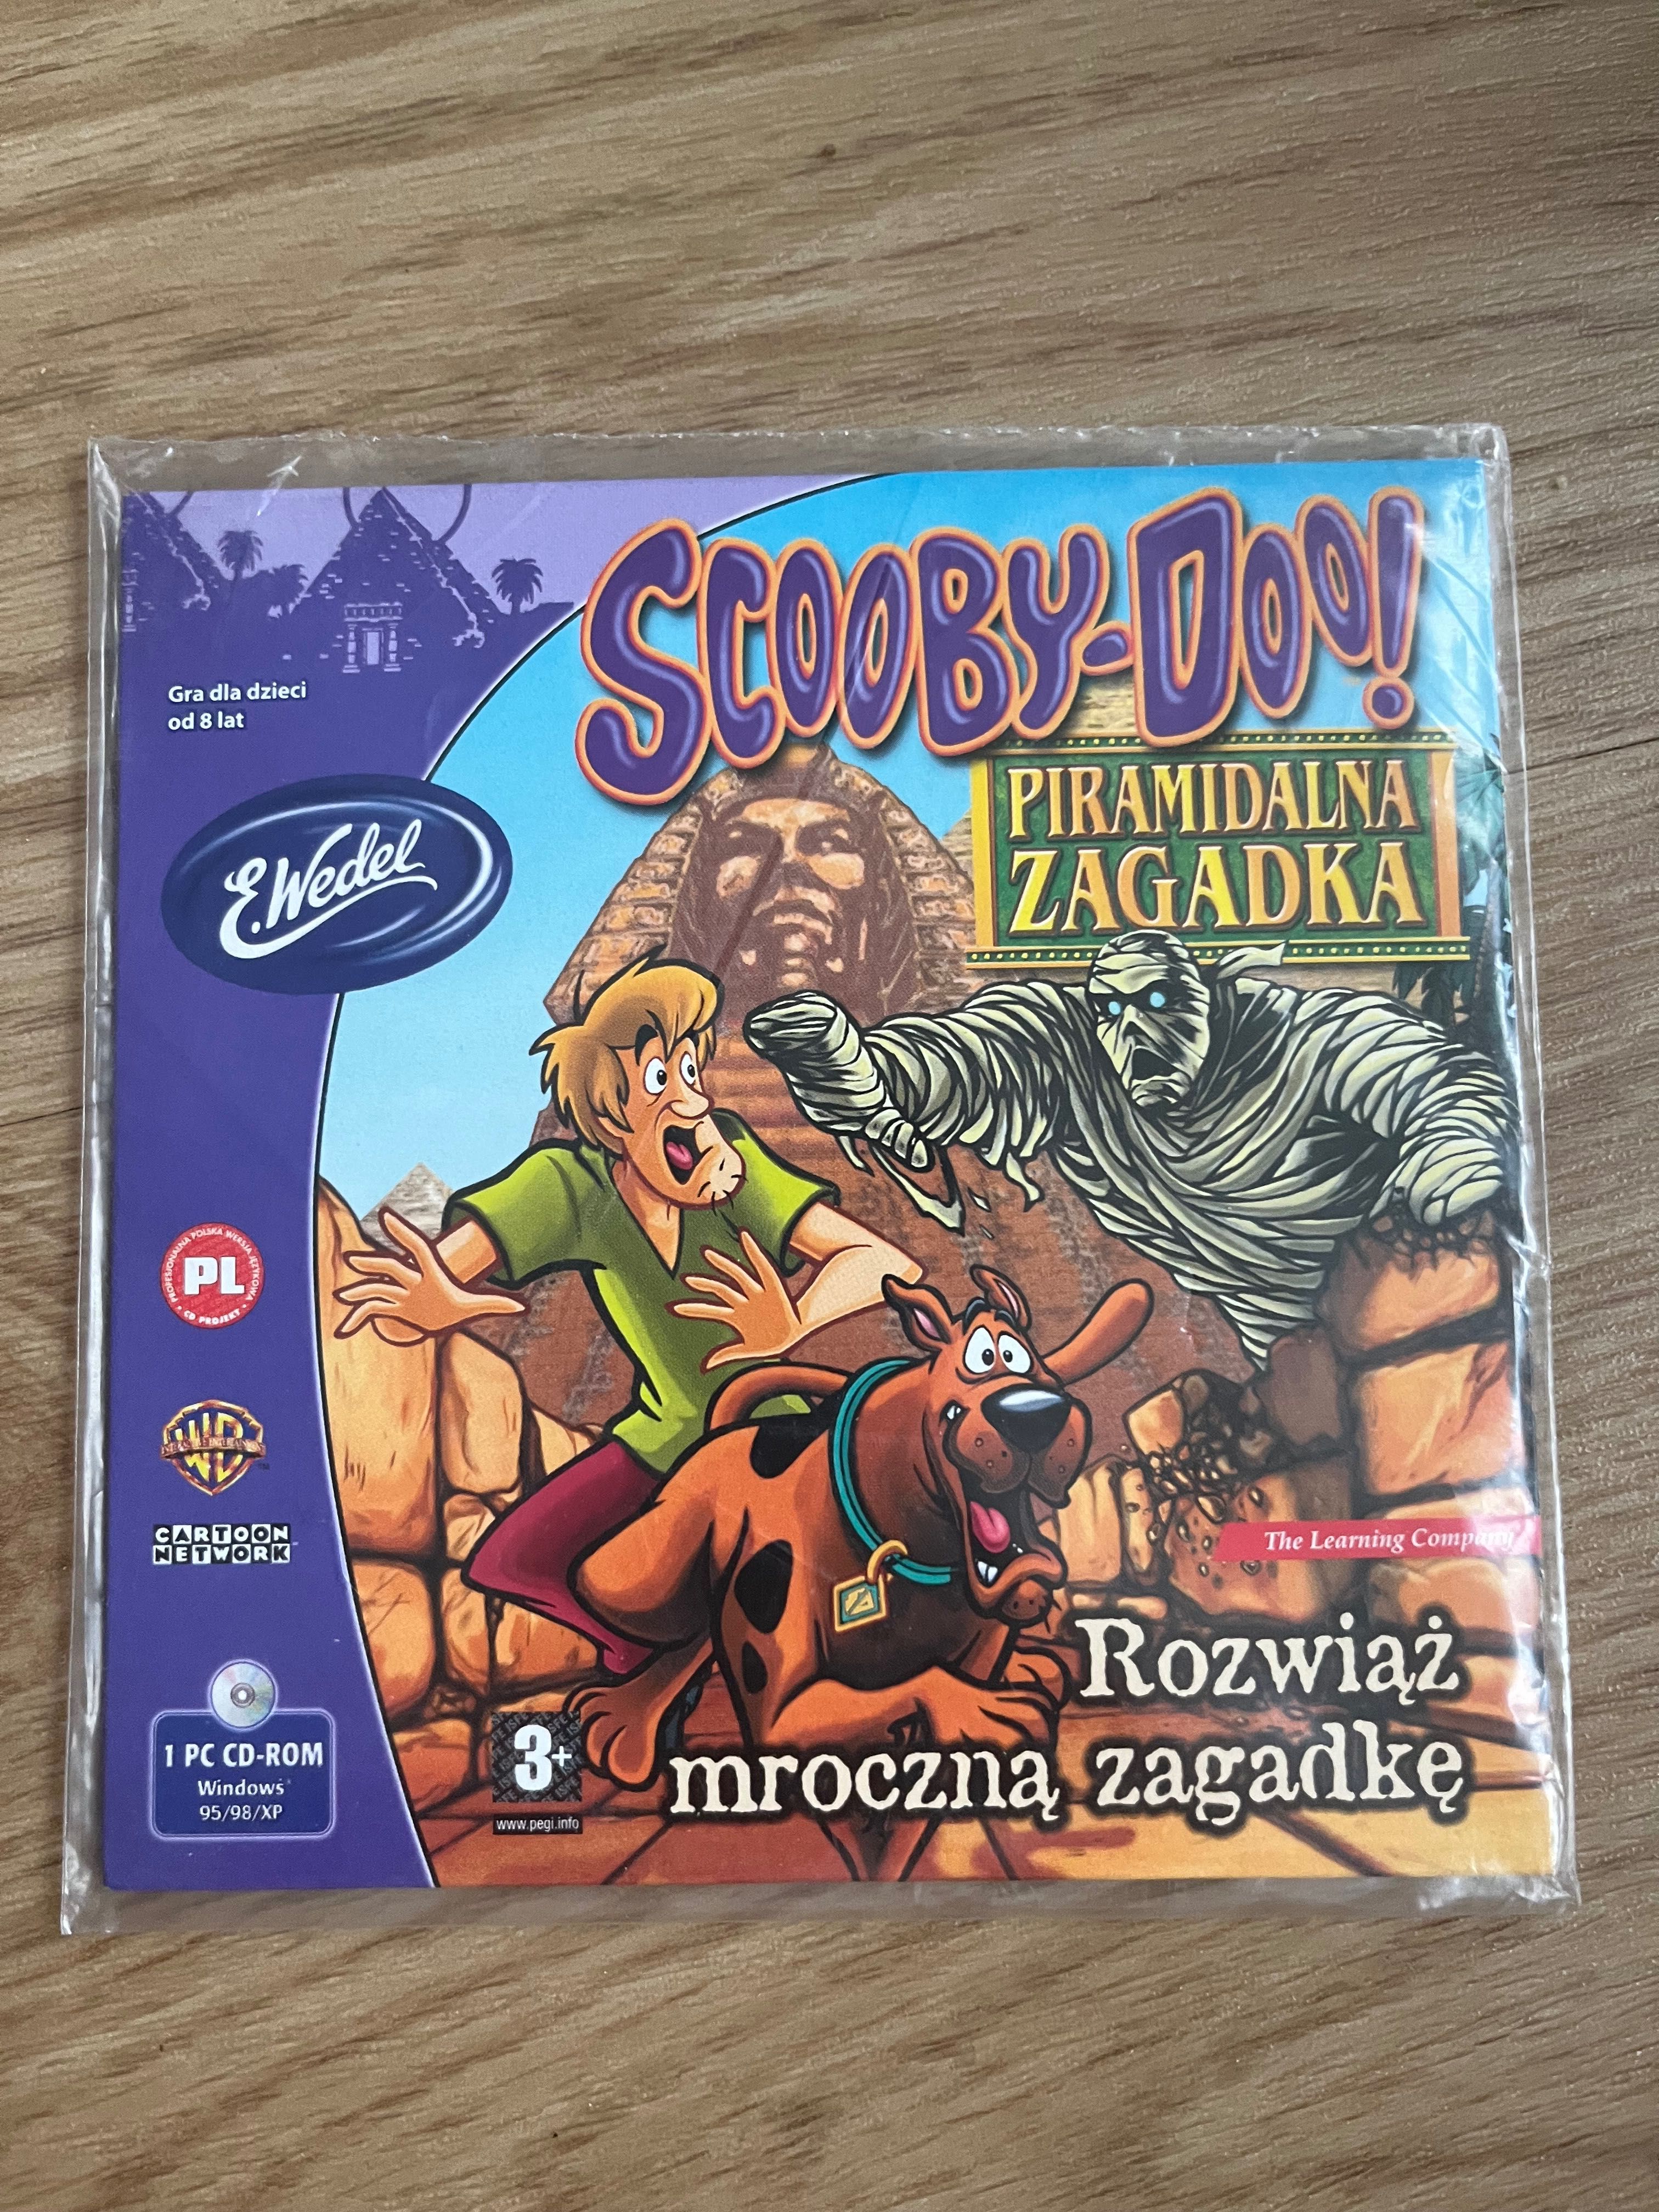 Scooby Doo Piramidalna Zagadka PC gra nowa